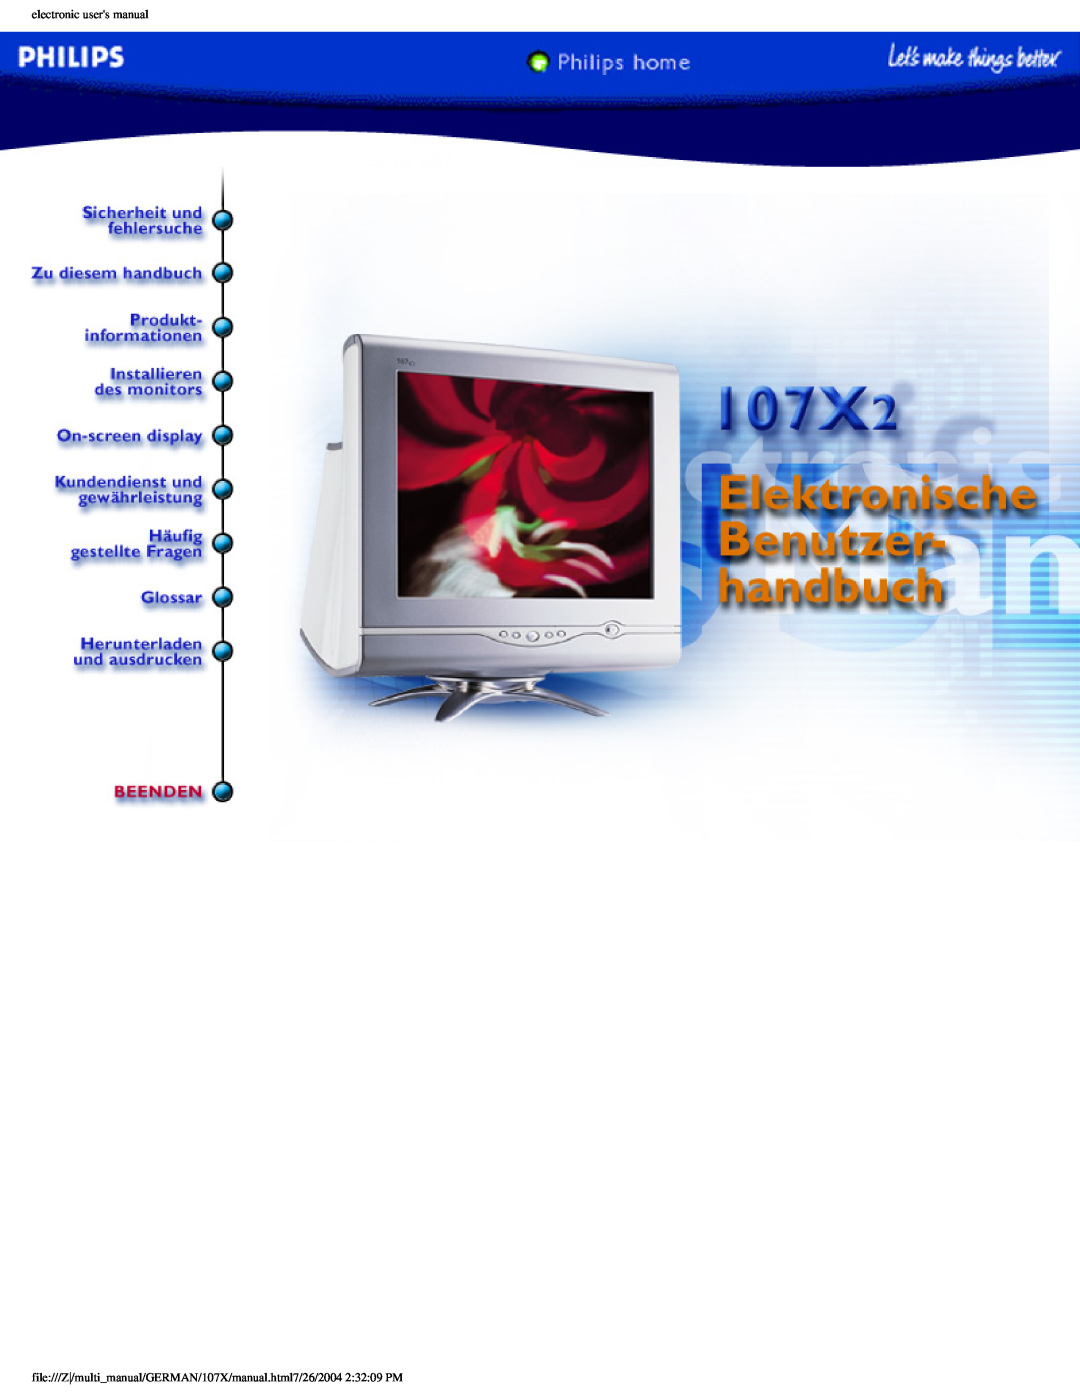 Philips 107X2 user manual electronic users manual, file///Z/multimanual/GERMAN/107X/manual.html7/26/2004 23209 PM 